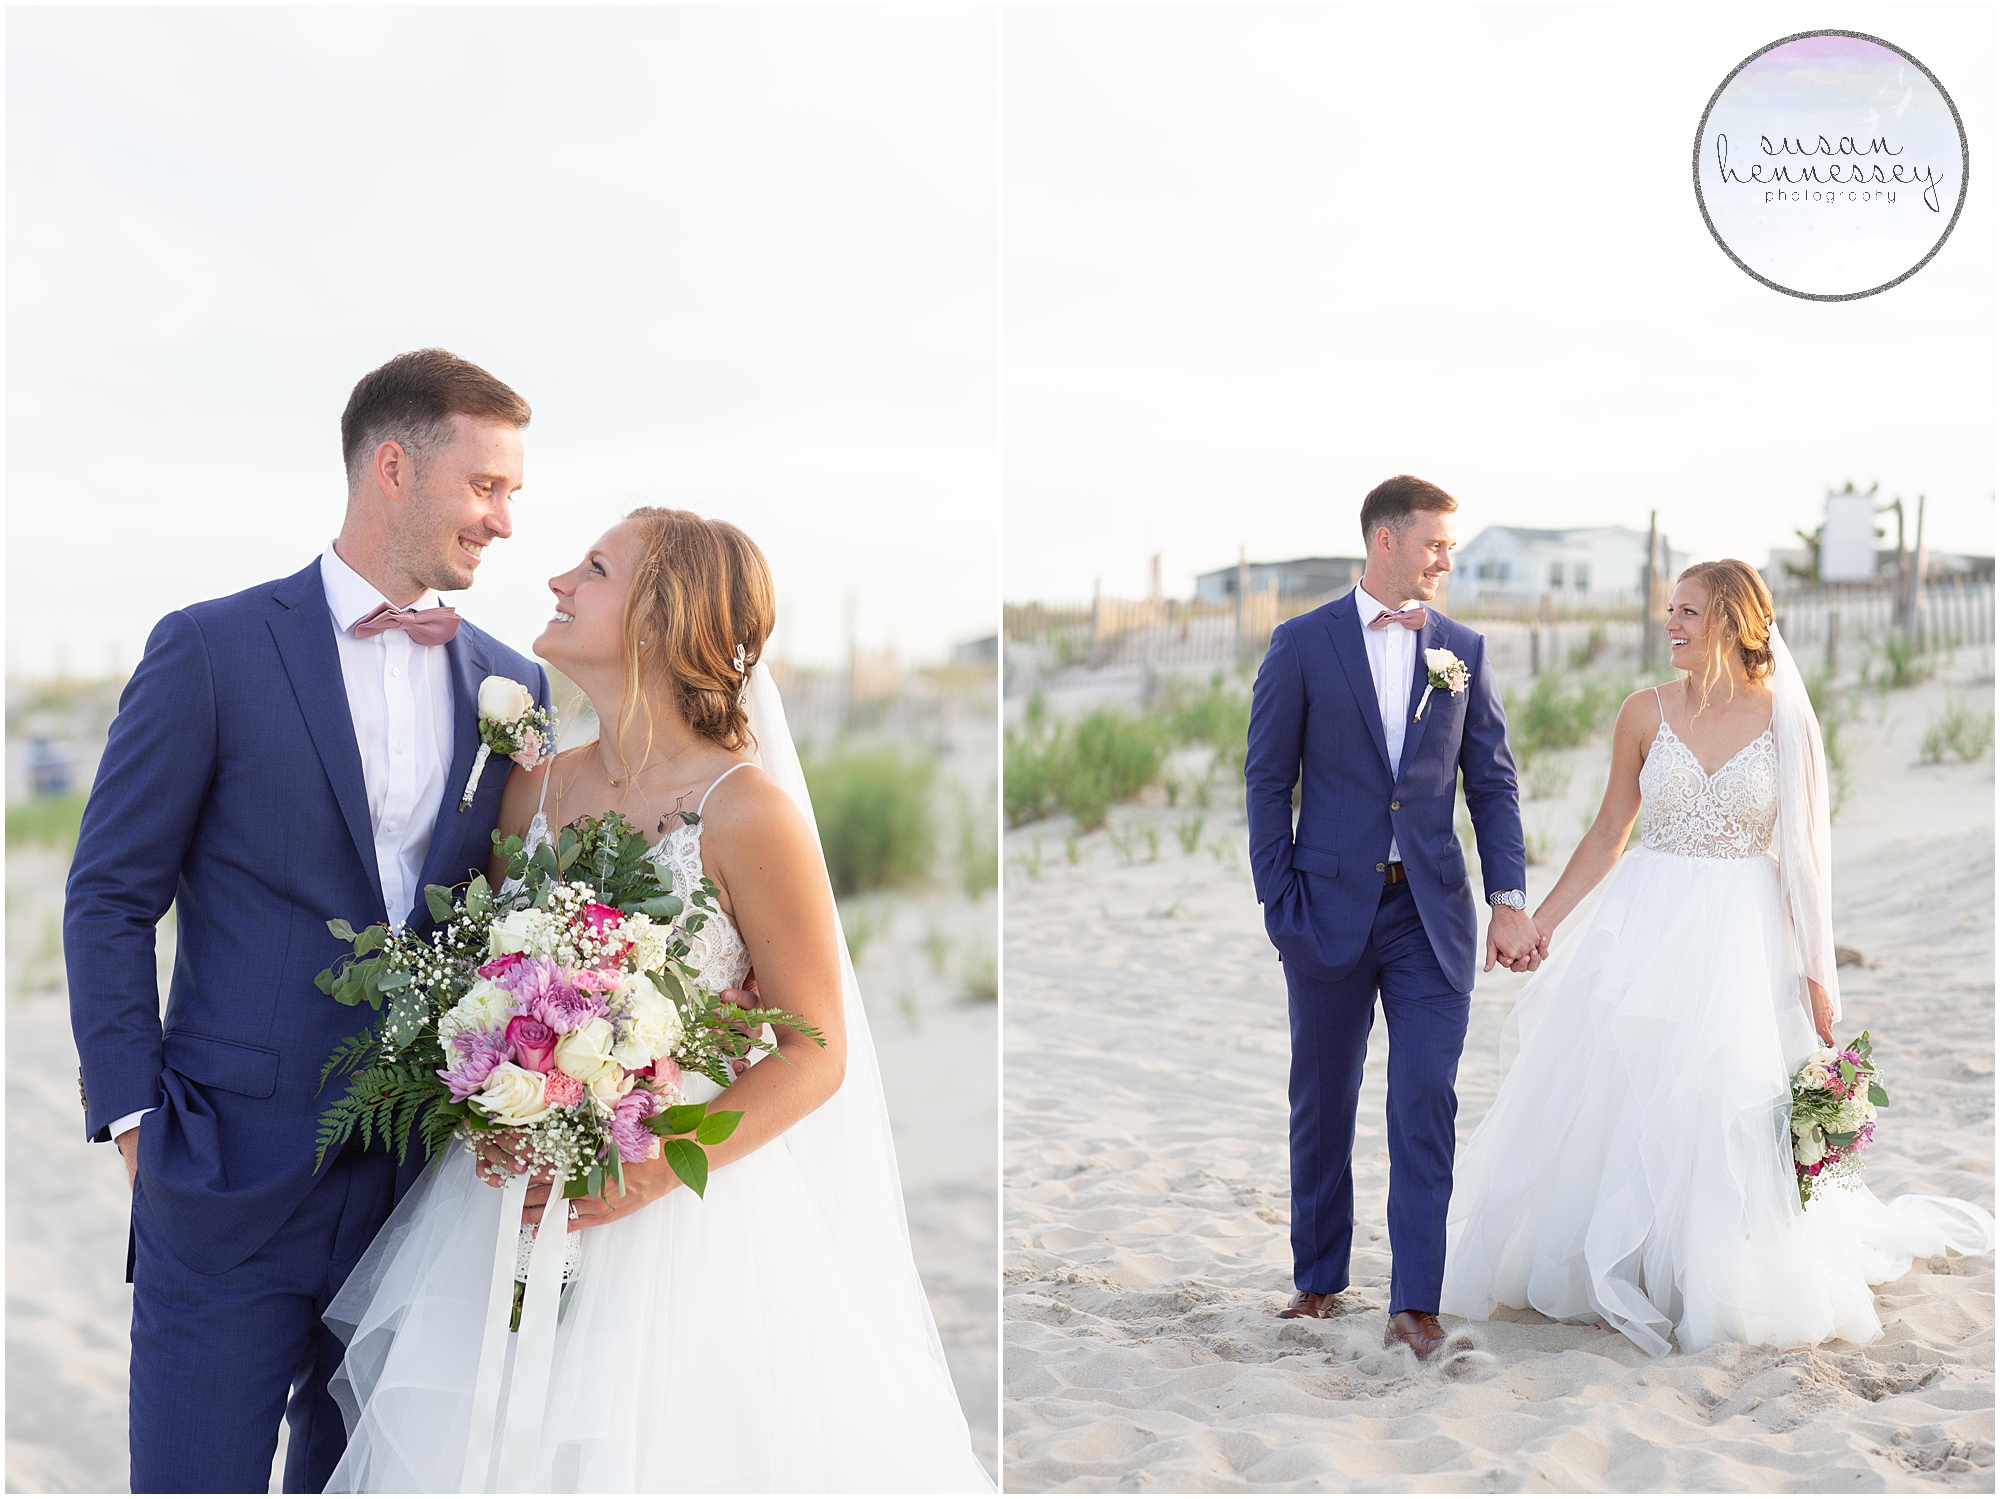 Bride and groom on the beach at Long Beach Island microwedding